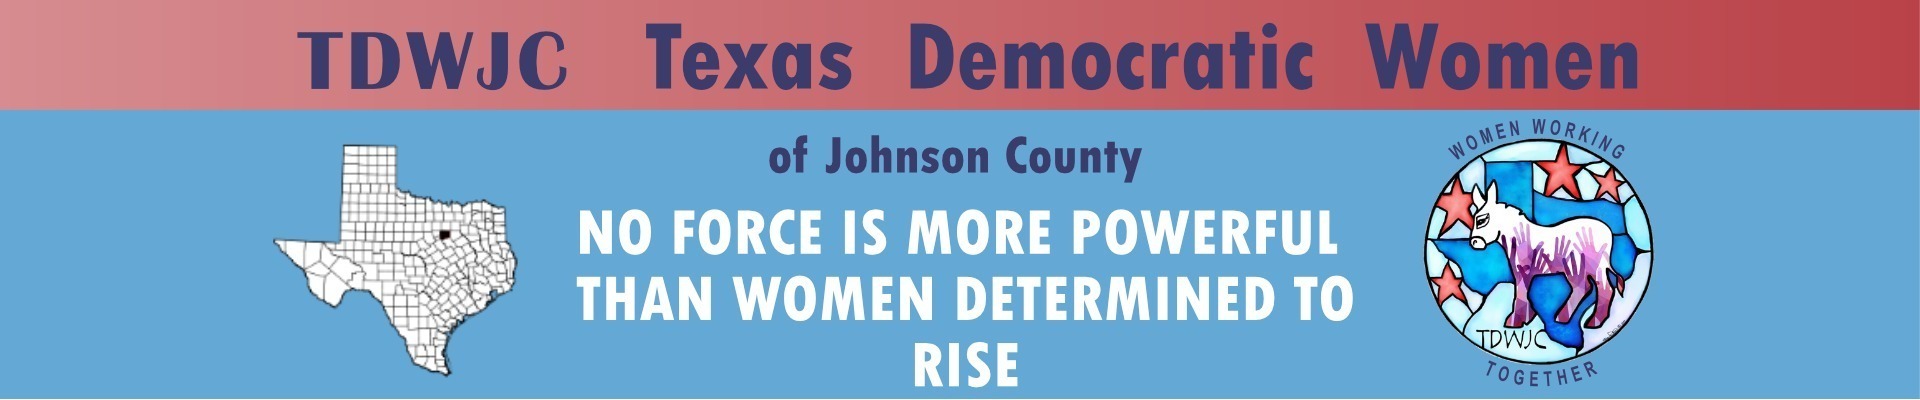 Texas Democratic Women of Johnson County